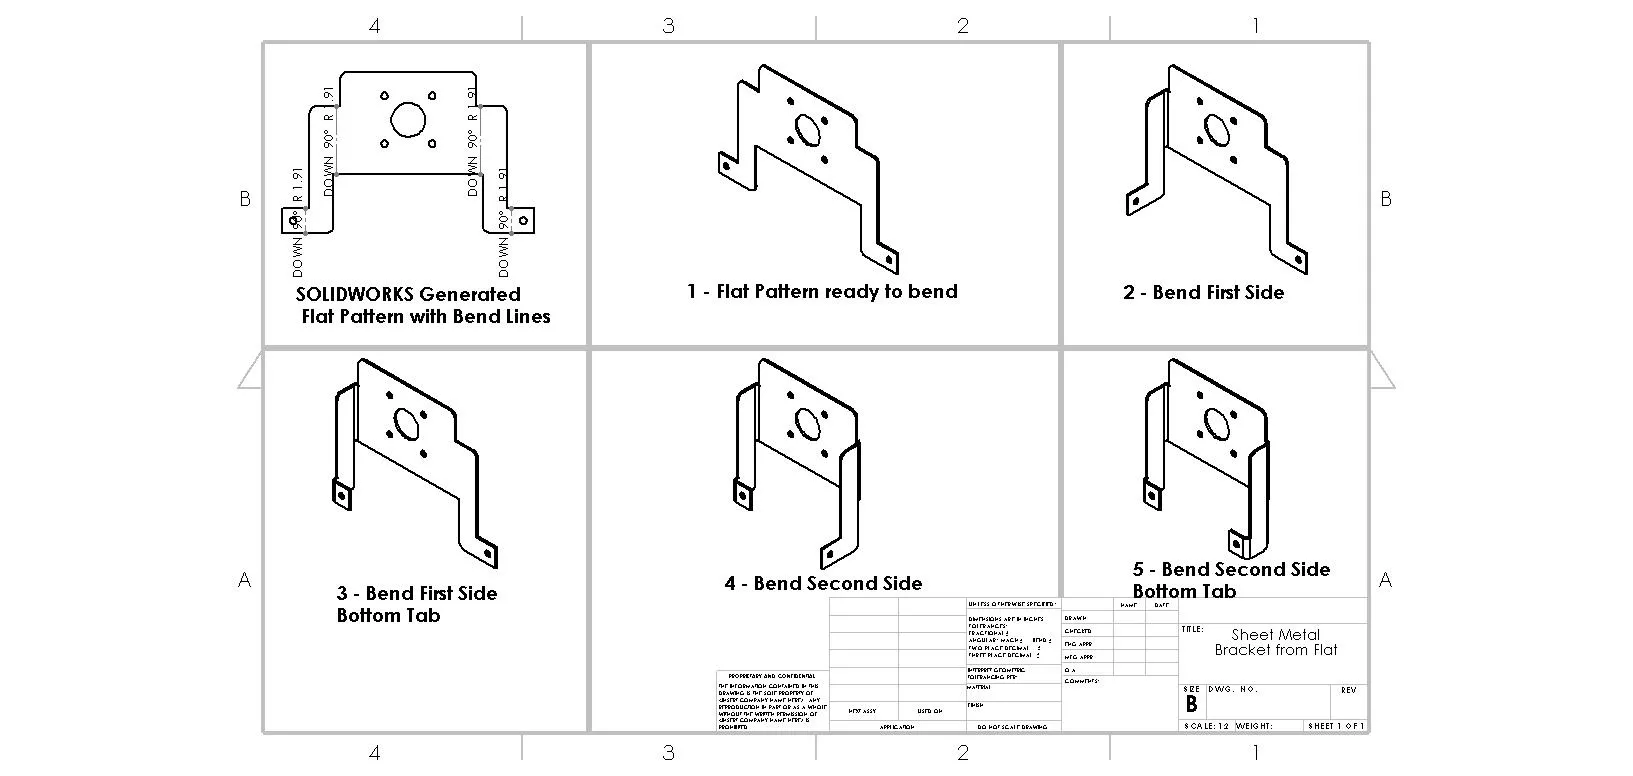 SOLIDWORKS Sheet Metal Tutorial Using Flat Pattern